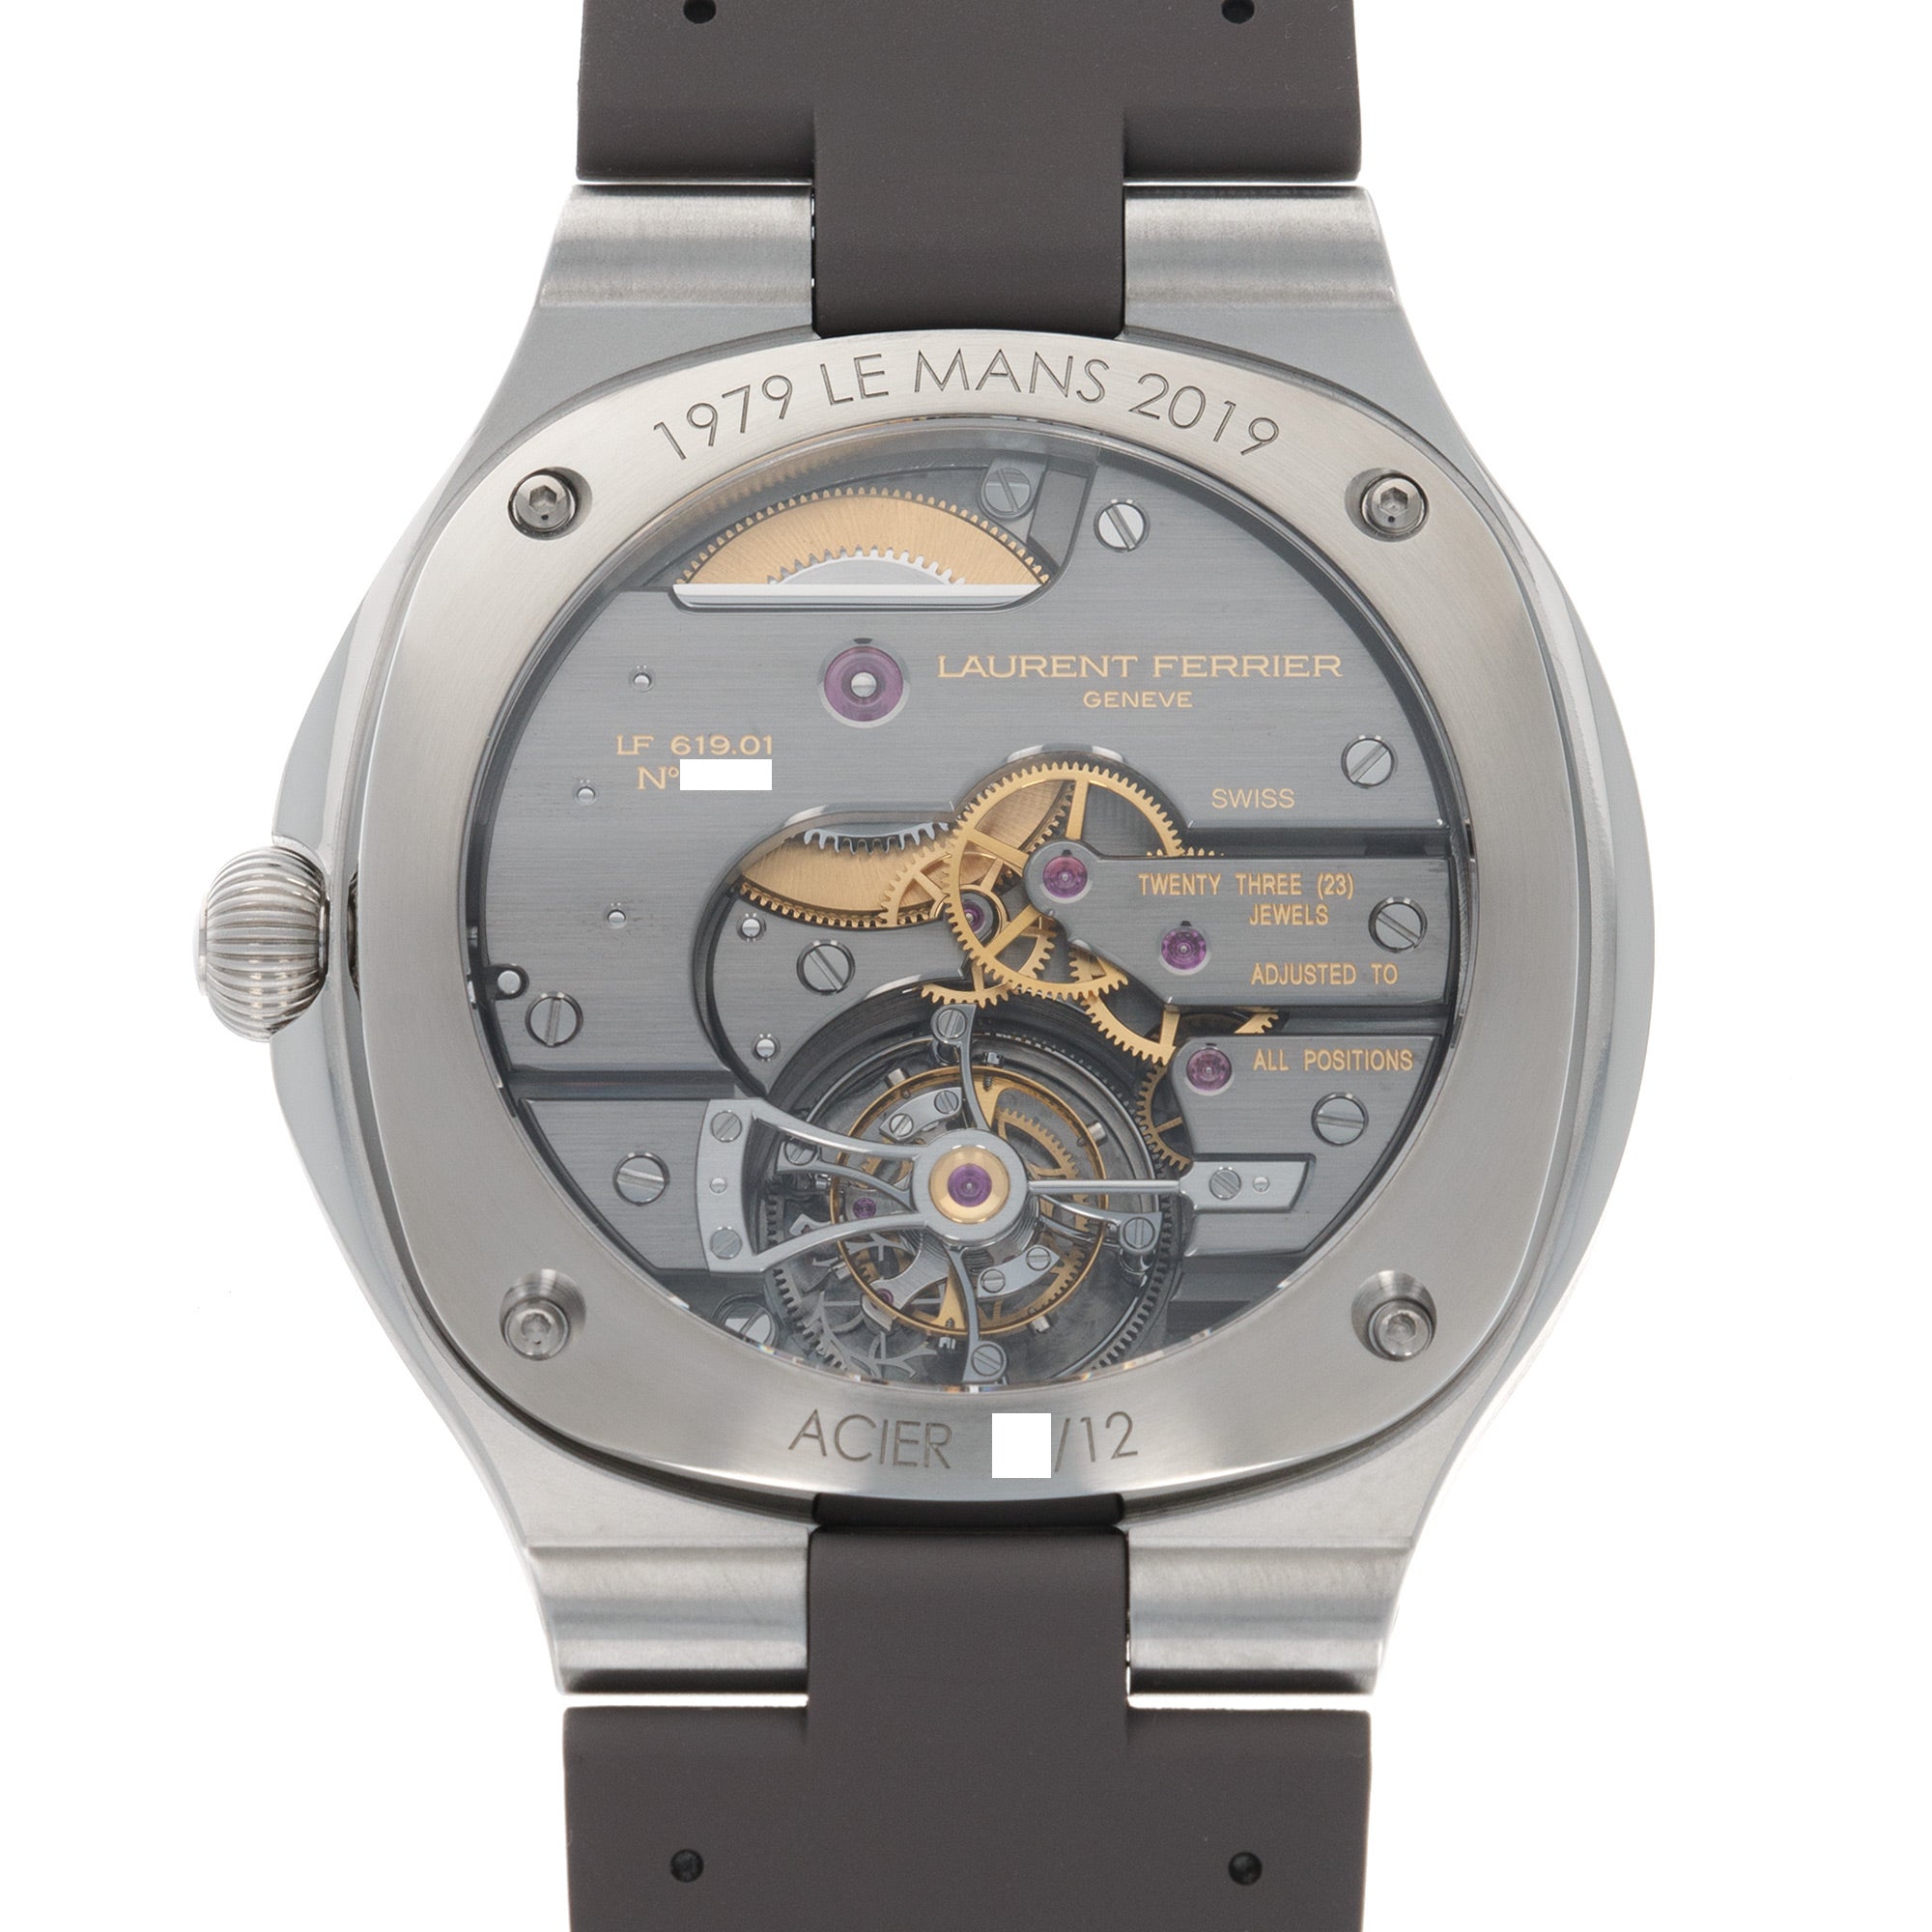 Laurent Ferrier - Laurent Ferrier Steel Grand Sport Tourbillon Watch, Limited to 12 Pieces - The Keystone Watches